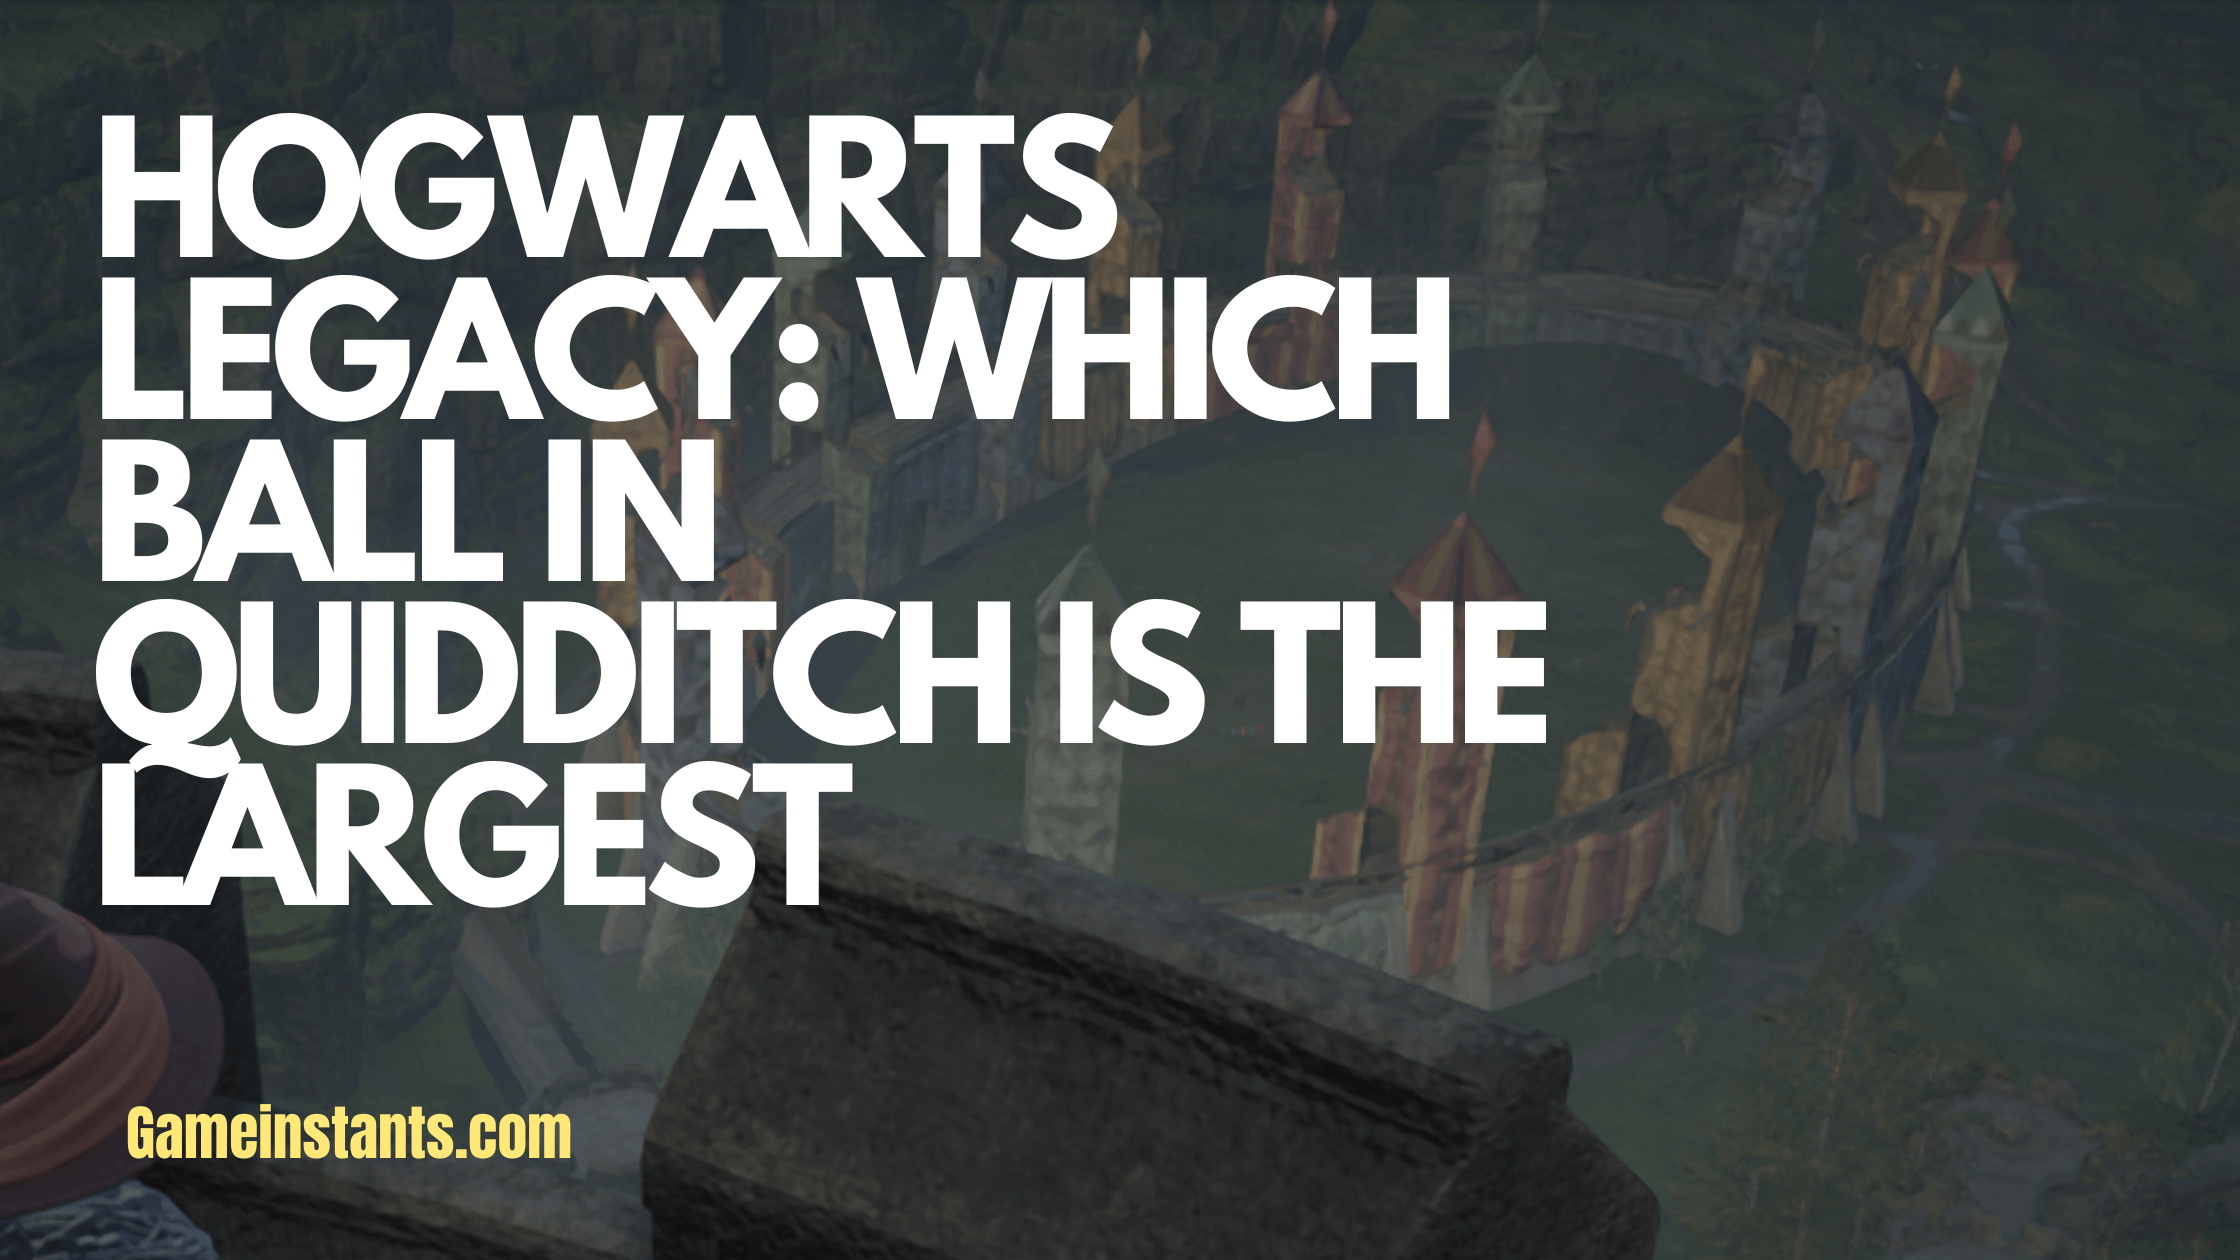 quidditch largest ball hogwarts legacy